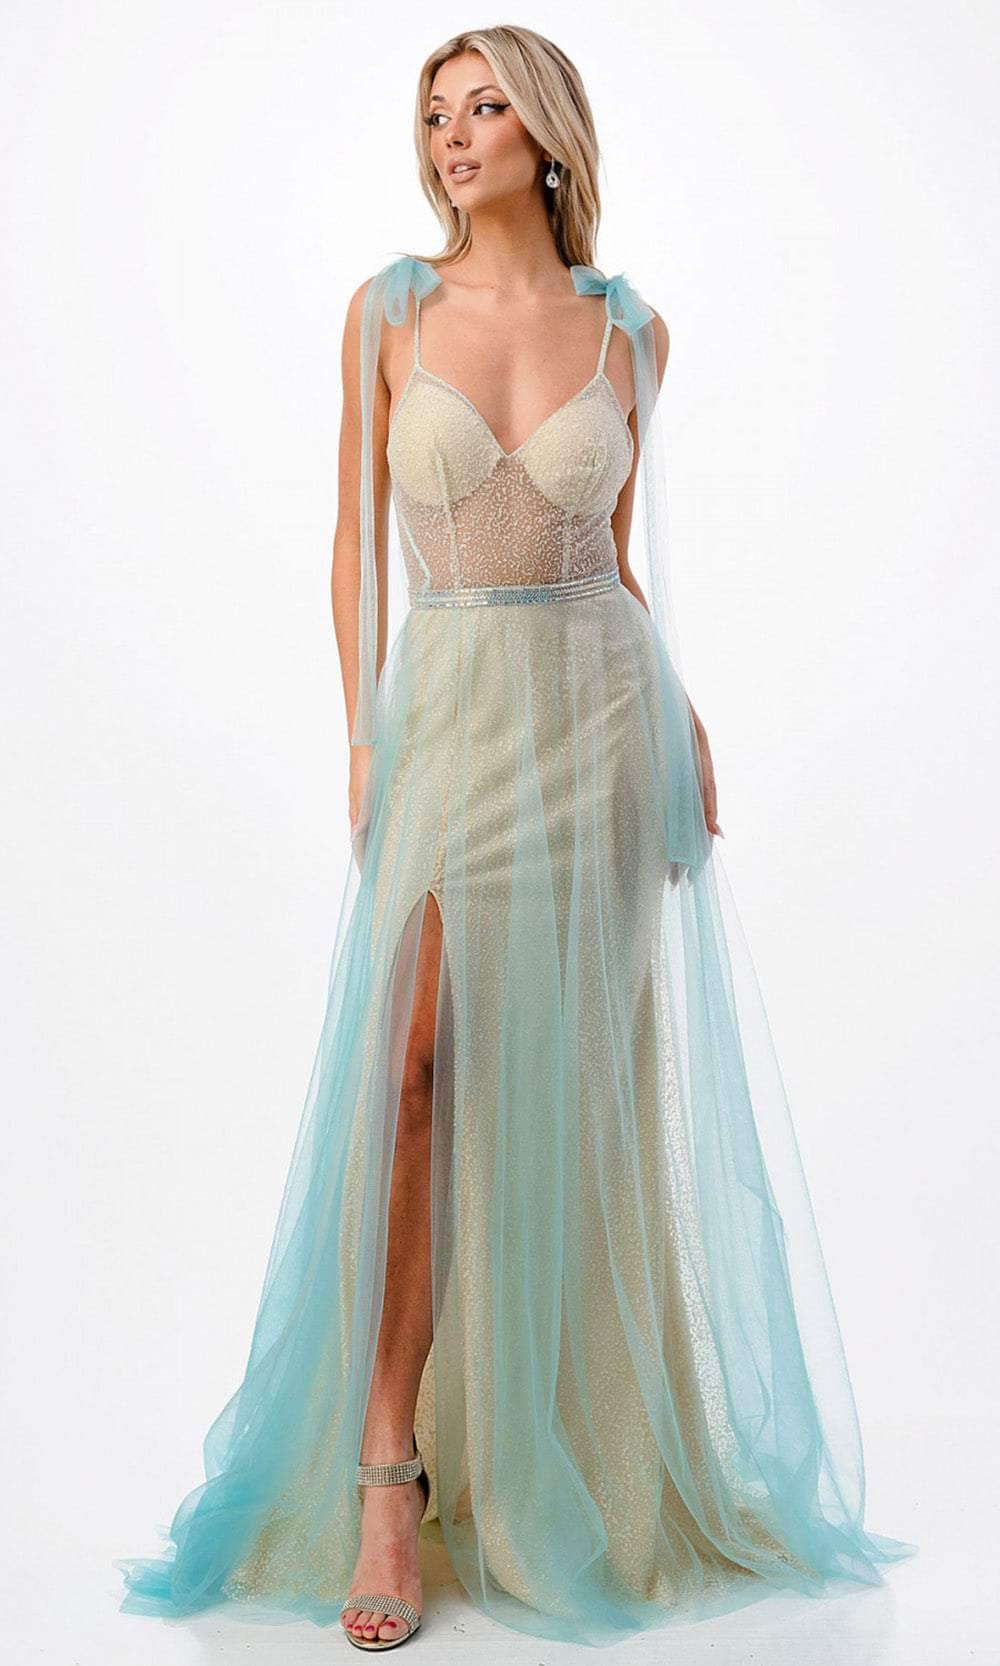 Image of Aspeed Design P2104 - Tie Strap Illusion Prom Gown